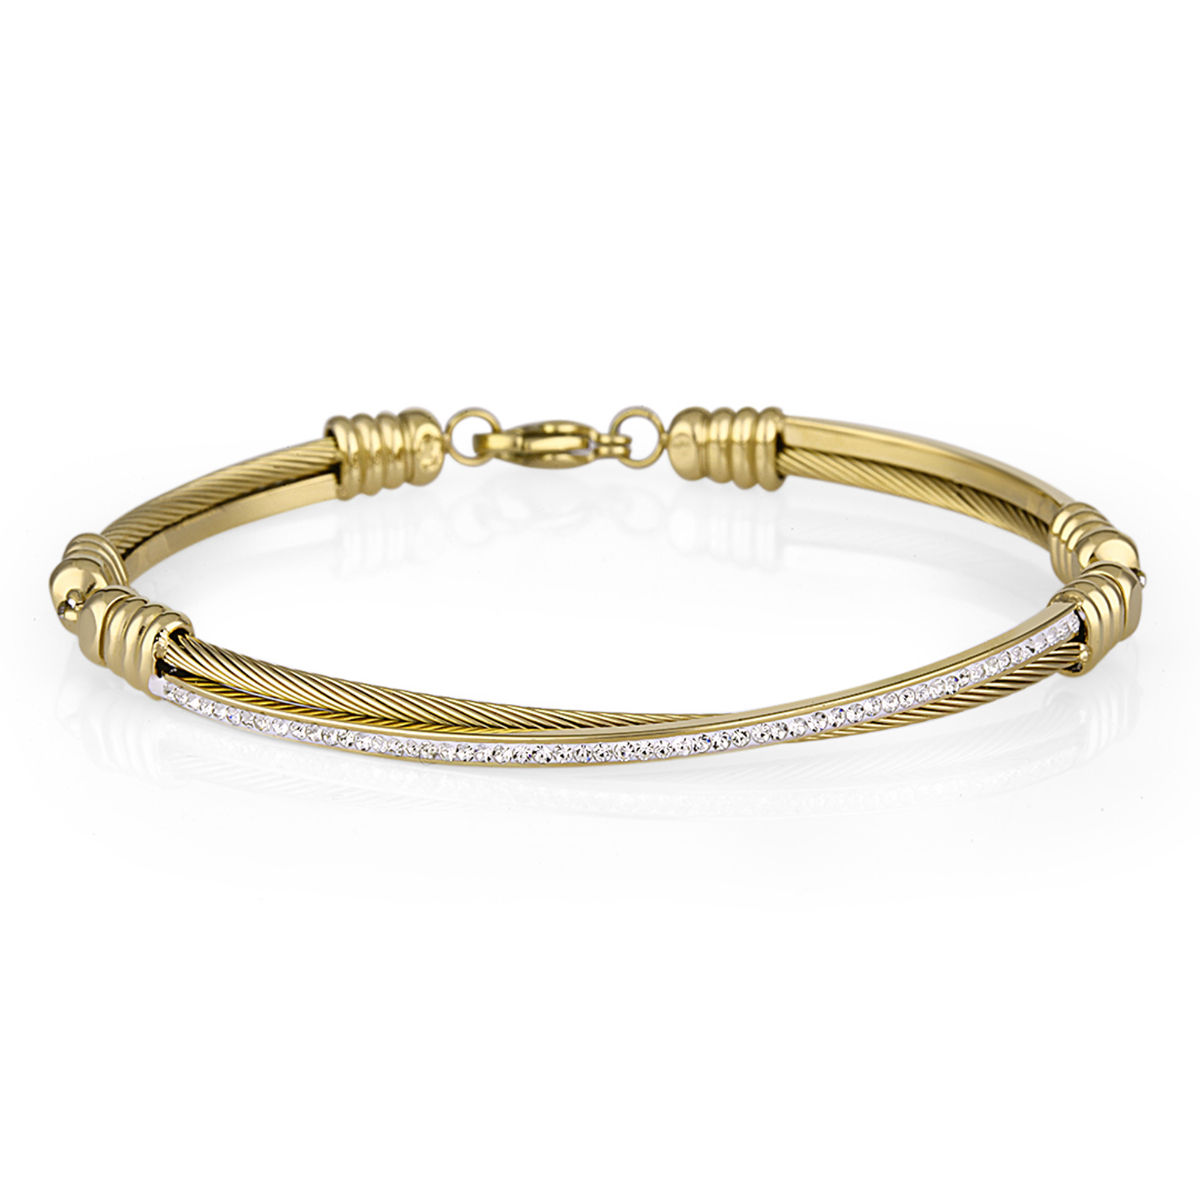 Daniel Klein Lebanon - Pieces that will never go out of style✨ D A N I E L  K L E I N steel jewelry Choose 👇🏻 any bracelet @ $ 23